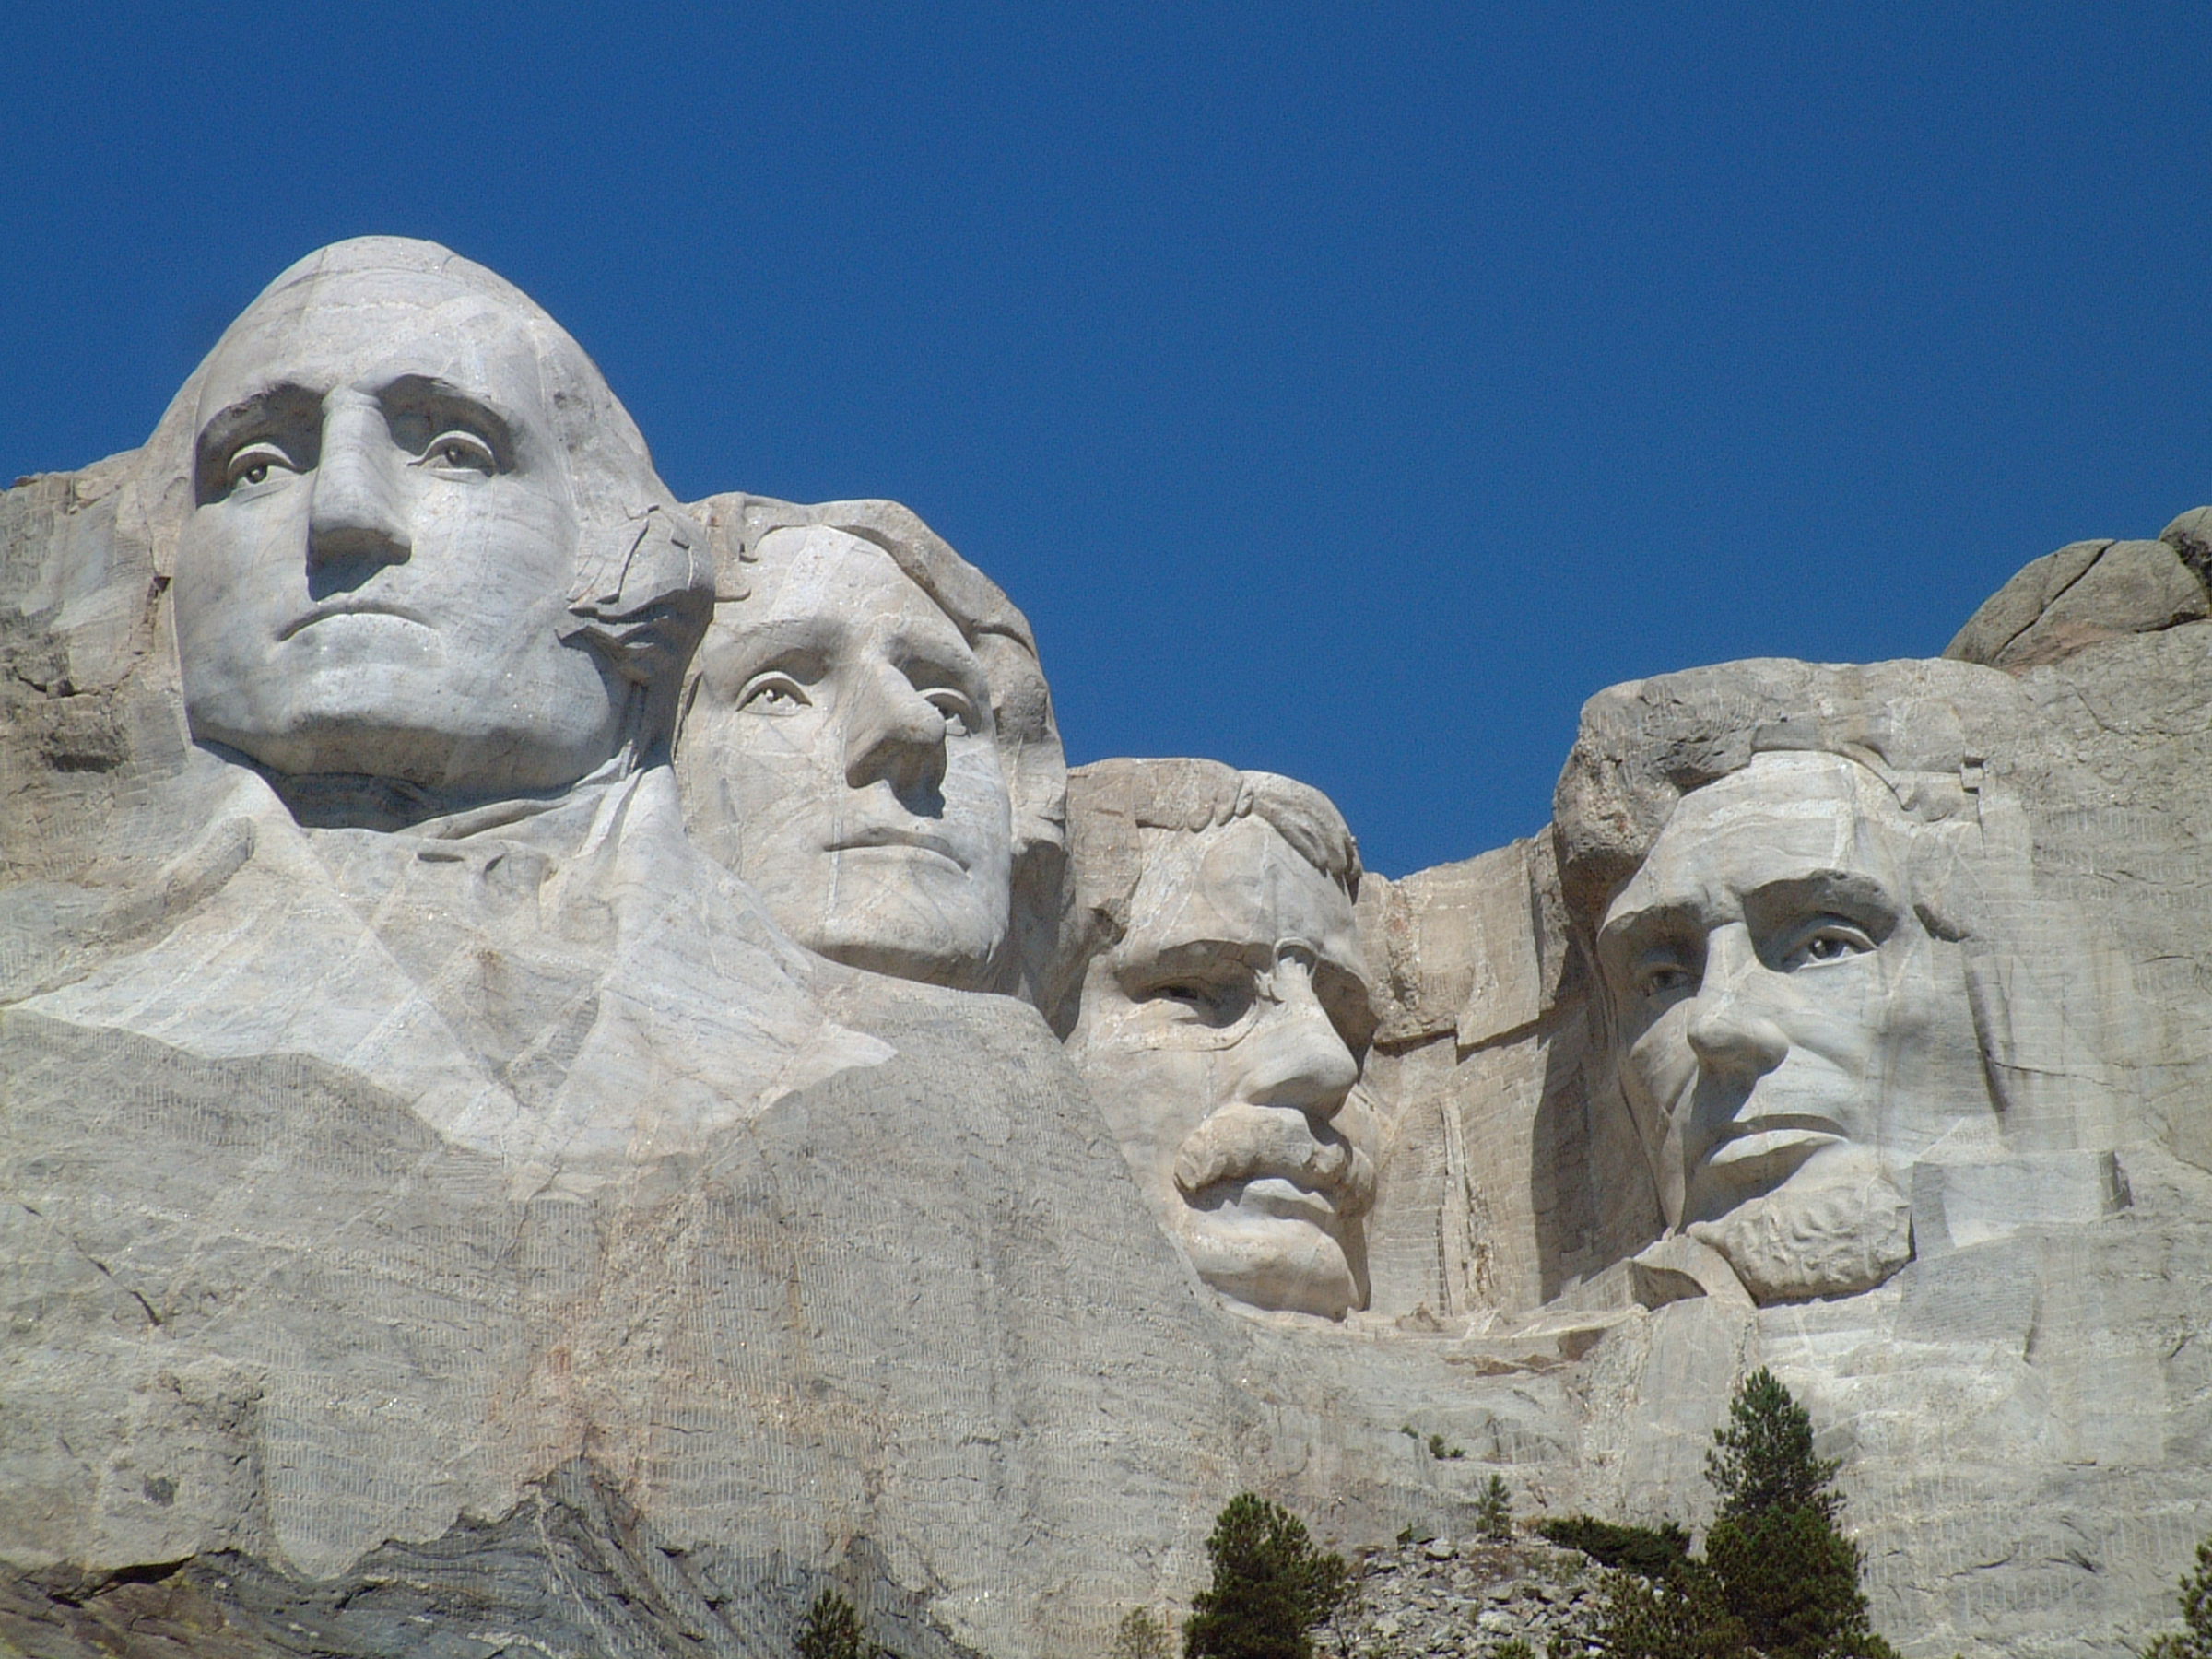 File:Mount Rushmore National Memorial.jpg - Wikimedia Commons